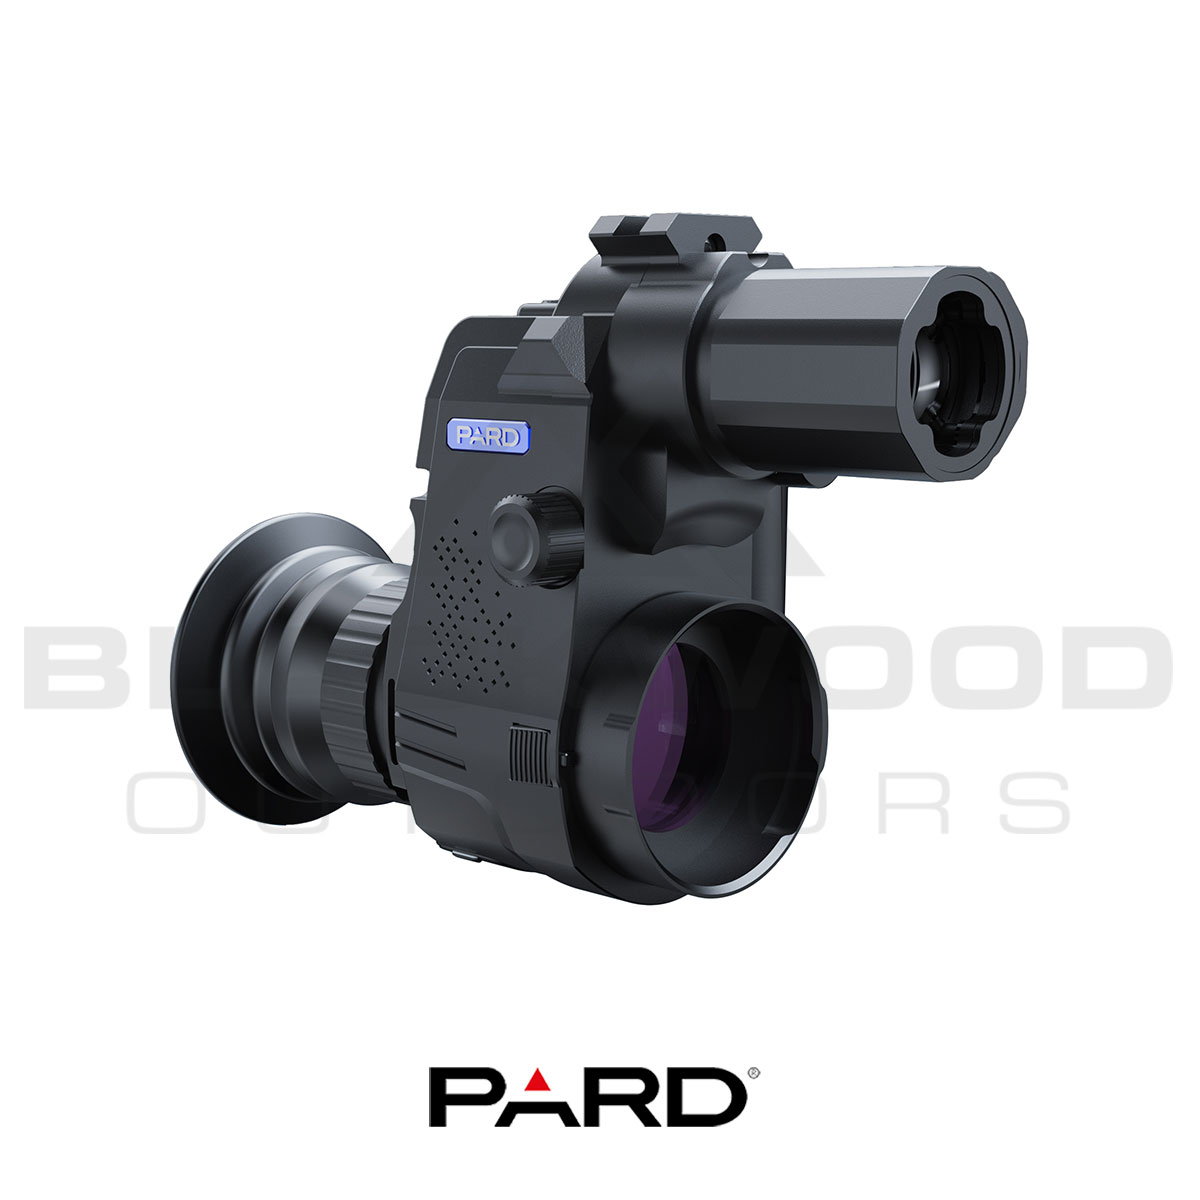 Pard NV007SP Front View with IR Illuminator